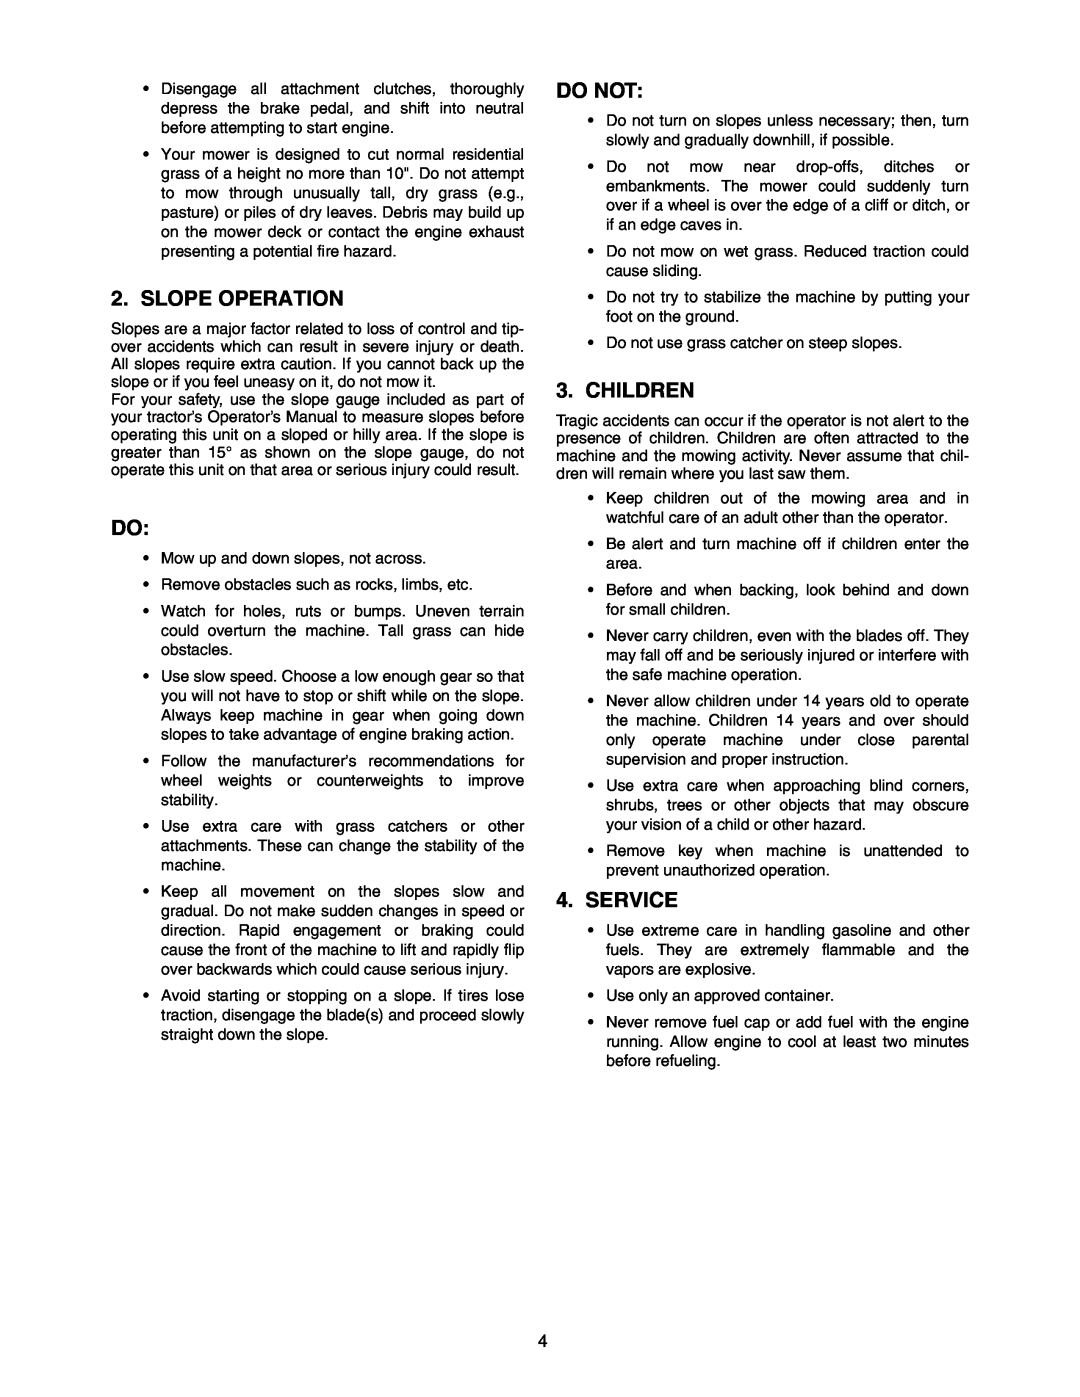 Bolens OEM-190-821 manual Slope Operation, Do Not, Children, Service 